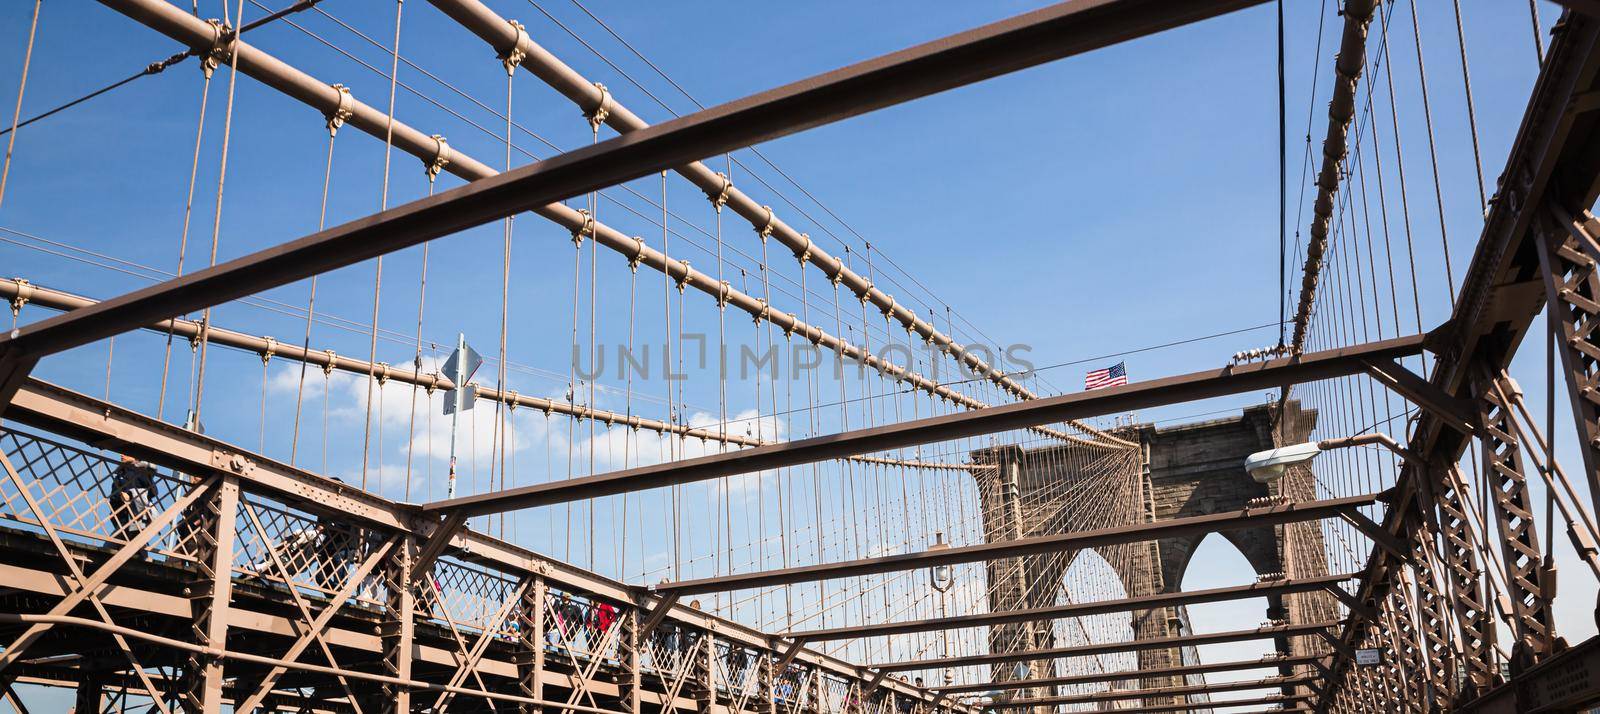 Brooklyn Bridge, New York, USA by palinchak